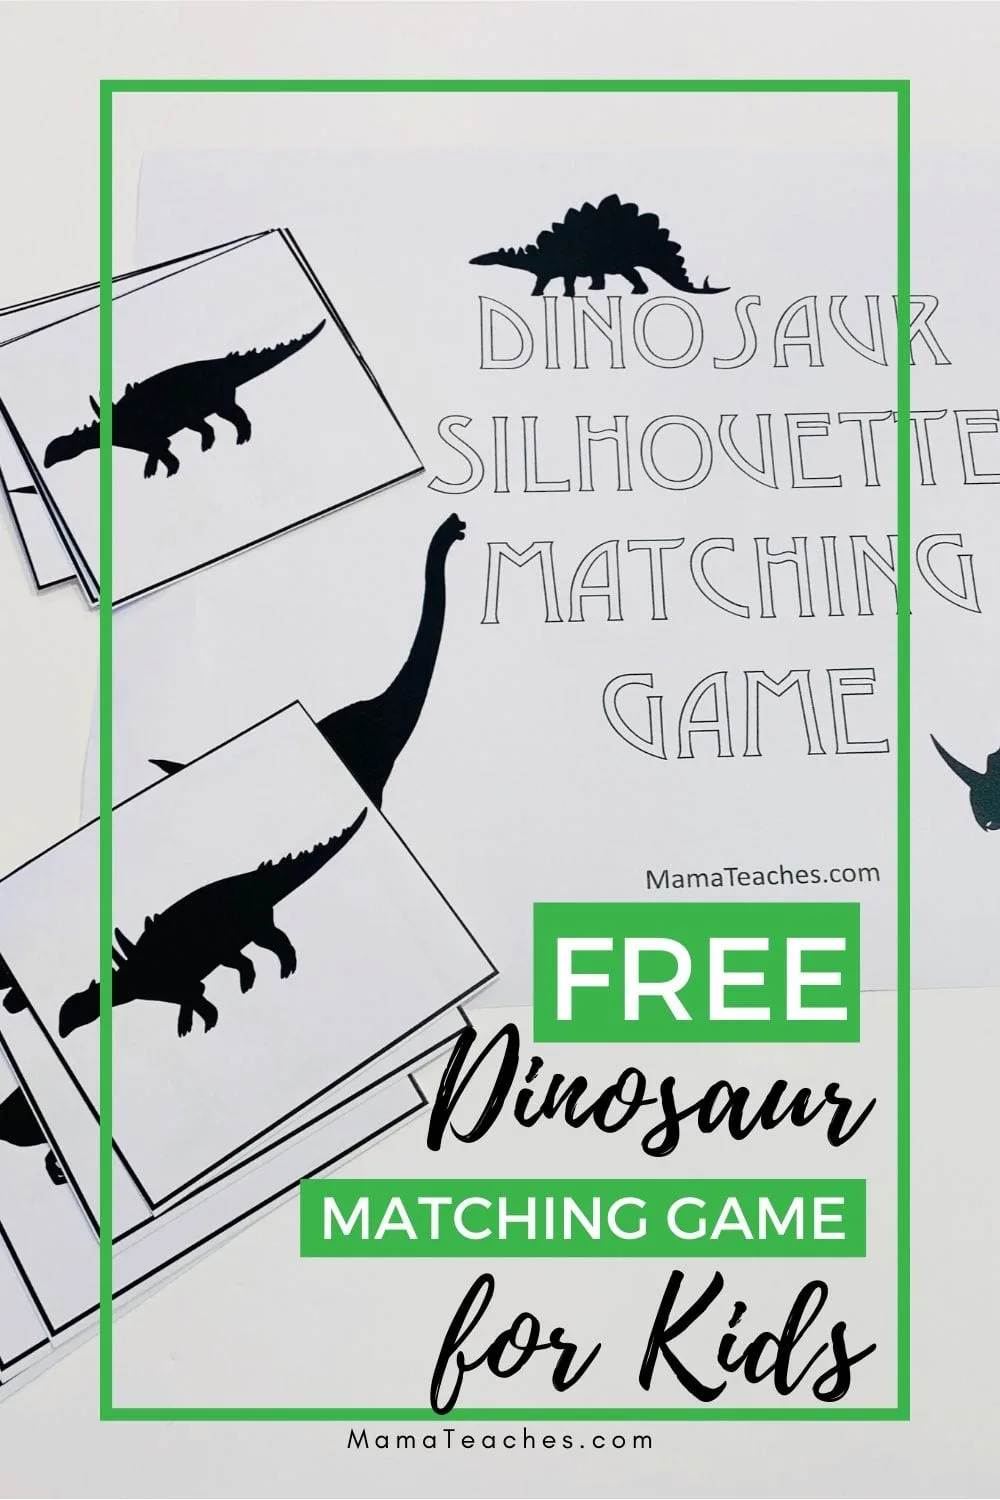 Free Dinosaur Matching Game for Kids - MamaTeaches.com